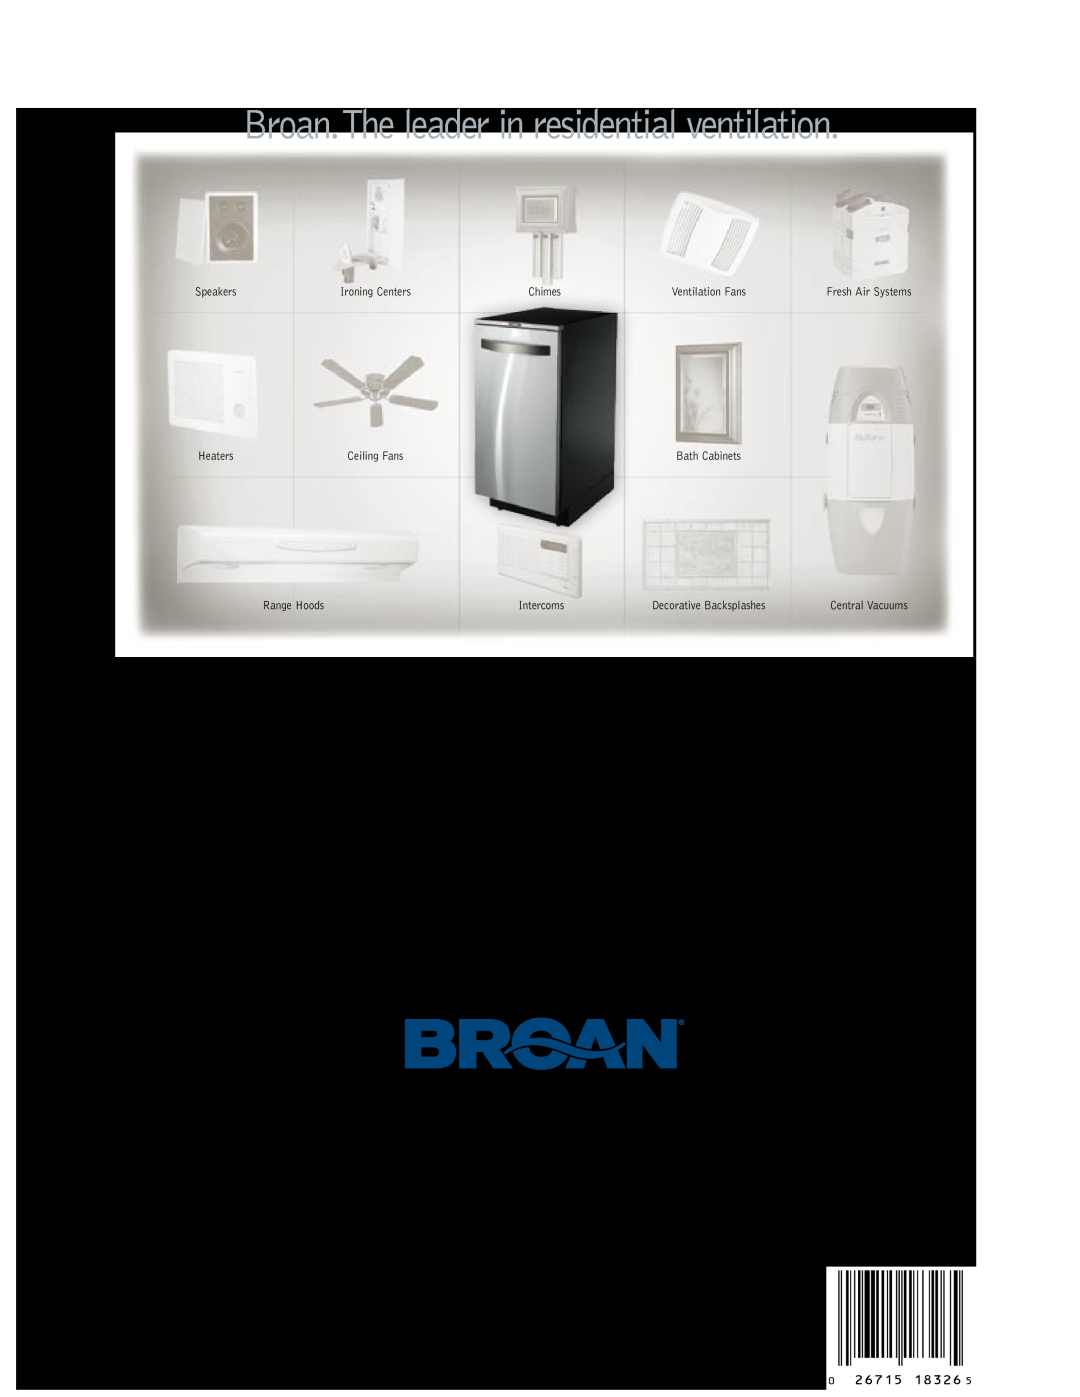 Broan 15XEWT manual Broan.The leader in residential ventilation 